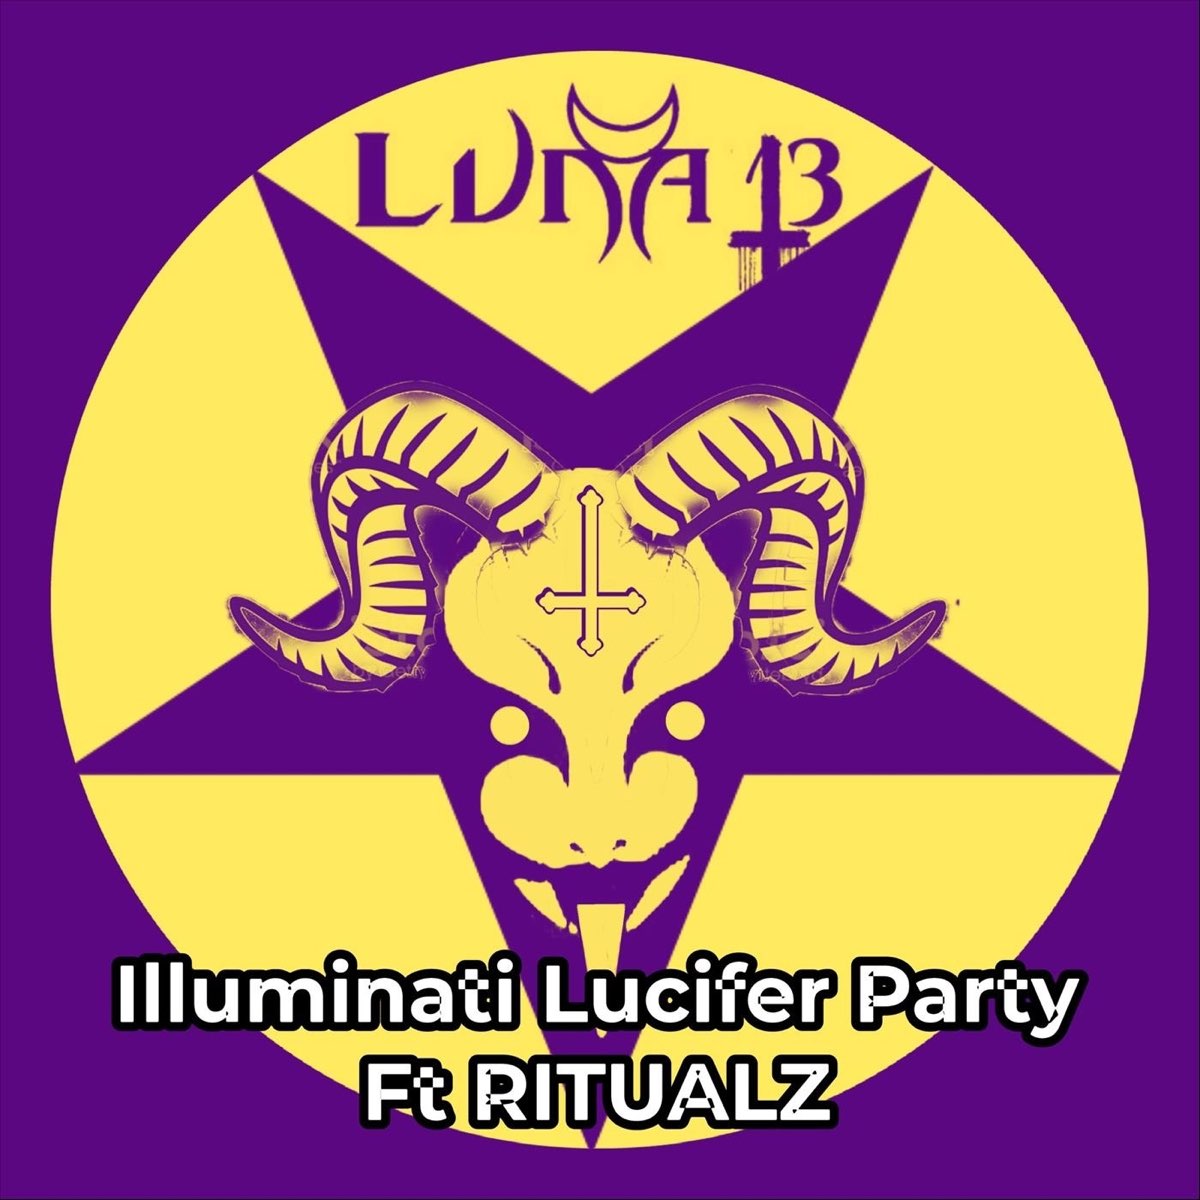 Illuminati Lucifer Party (feat. Ritualz) - Single - Album by Luna 13 -  Apple Music